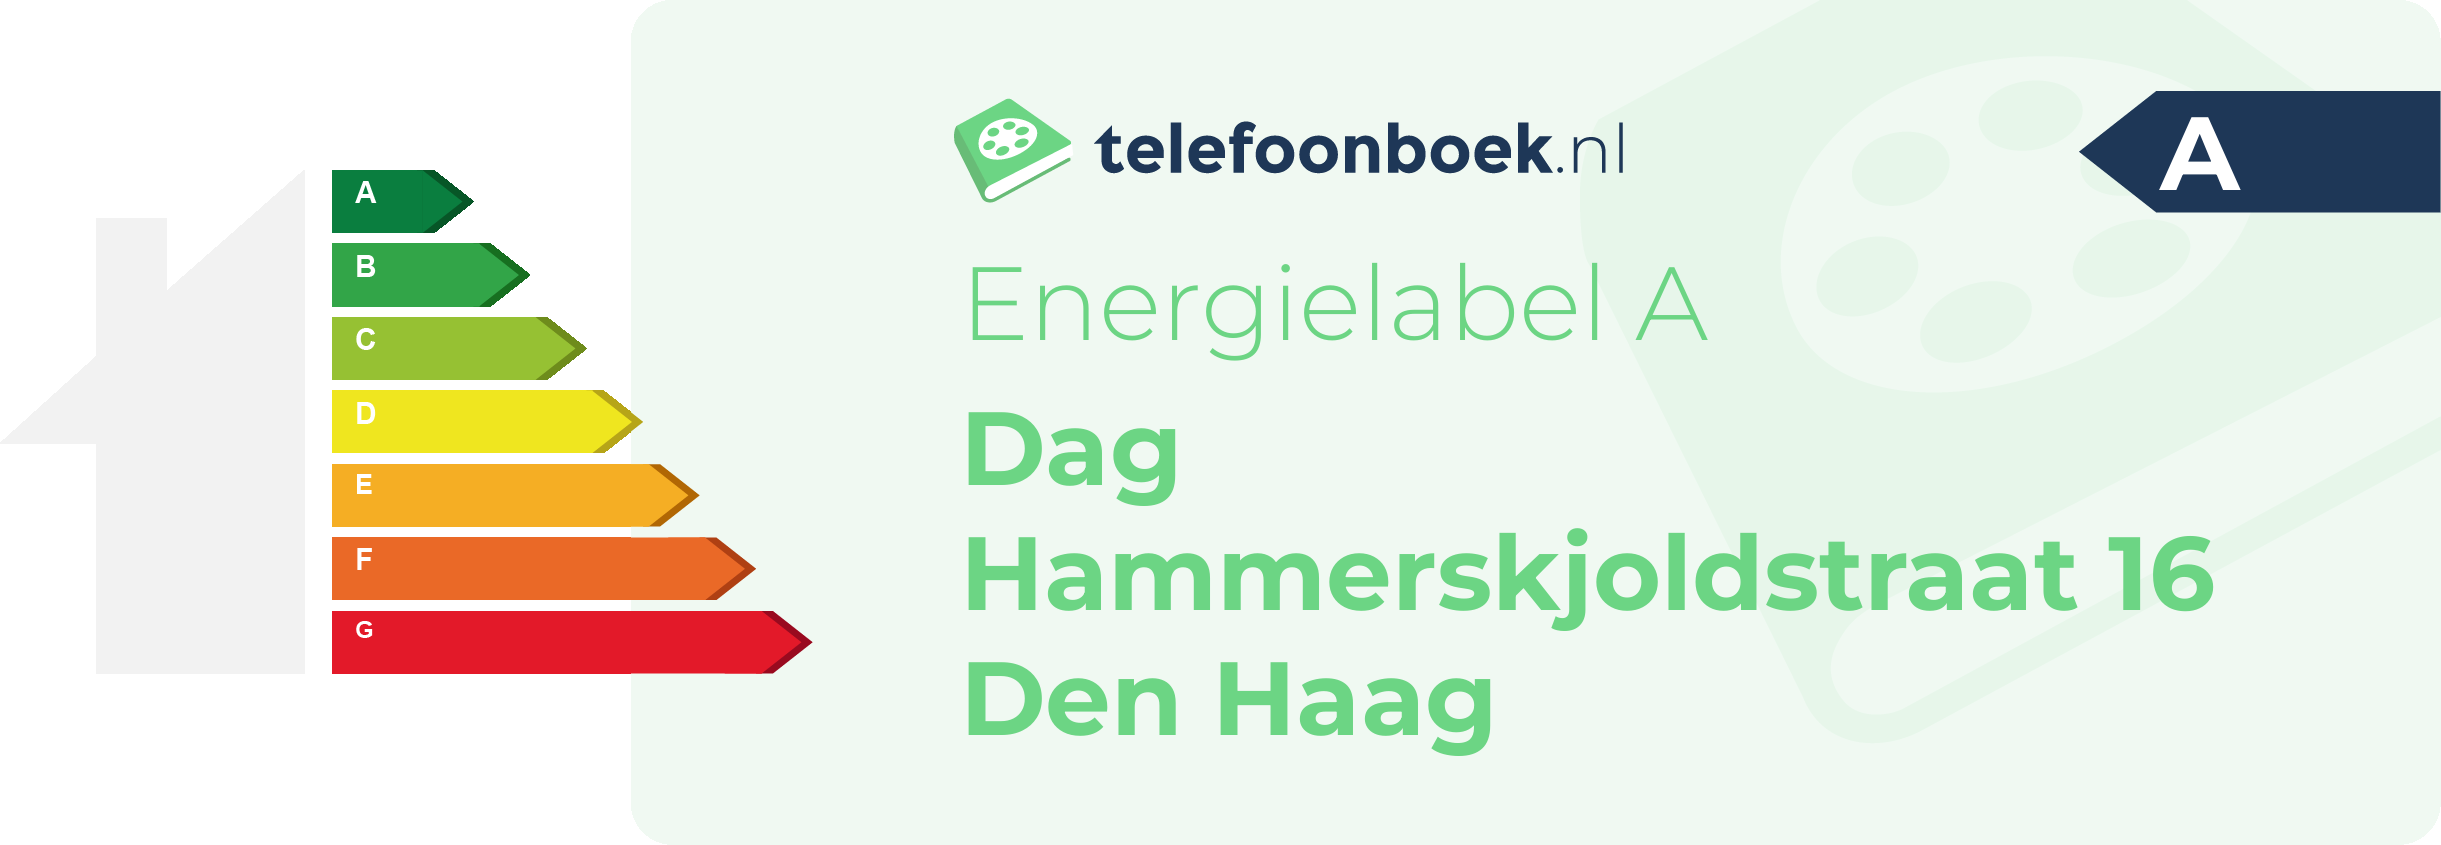 Energielabel Dag Hammerskjoldstraat 16 Den Haag